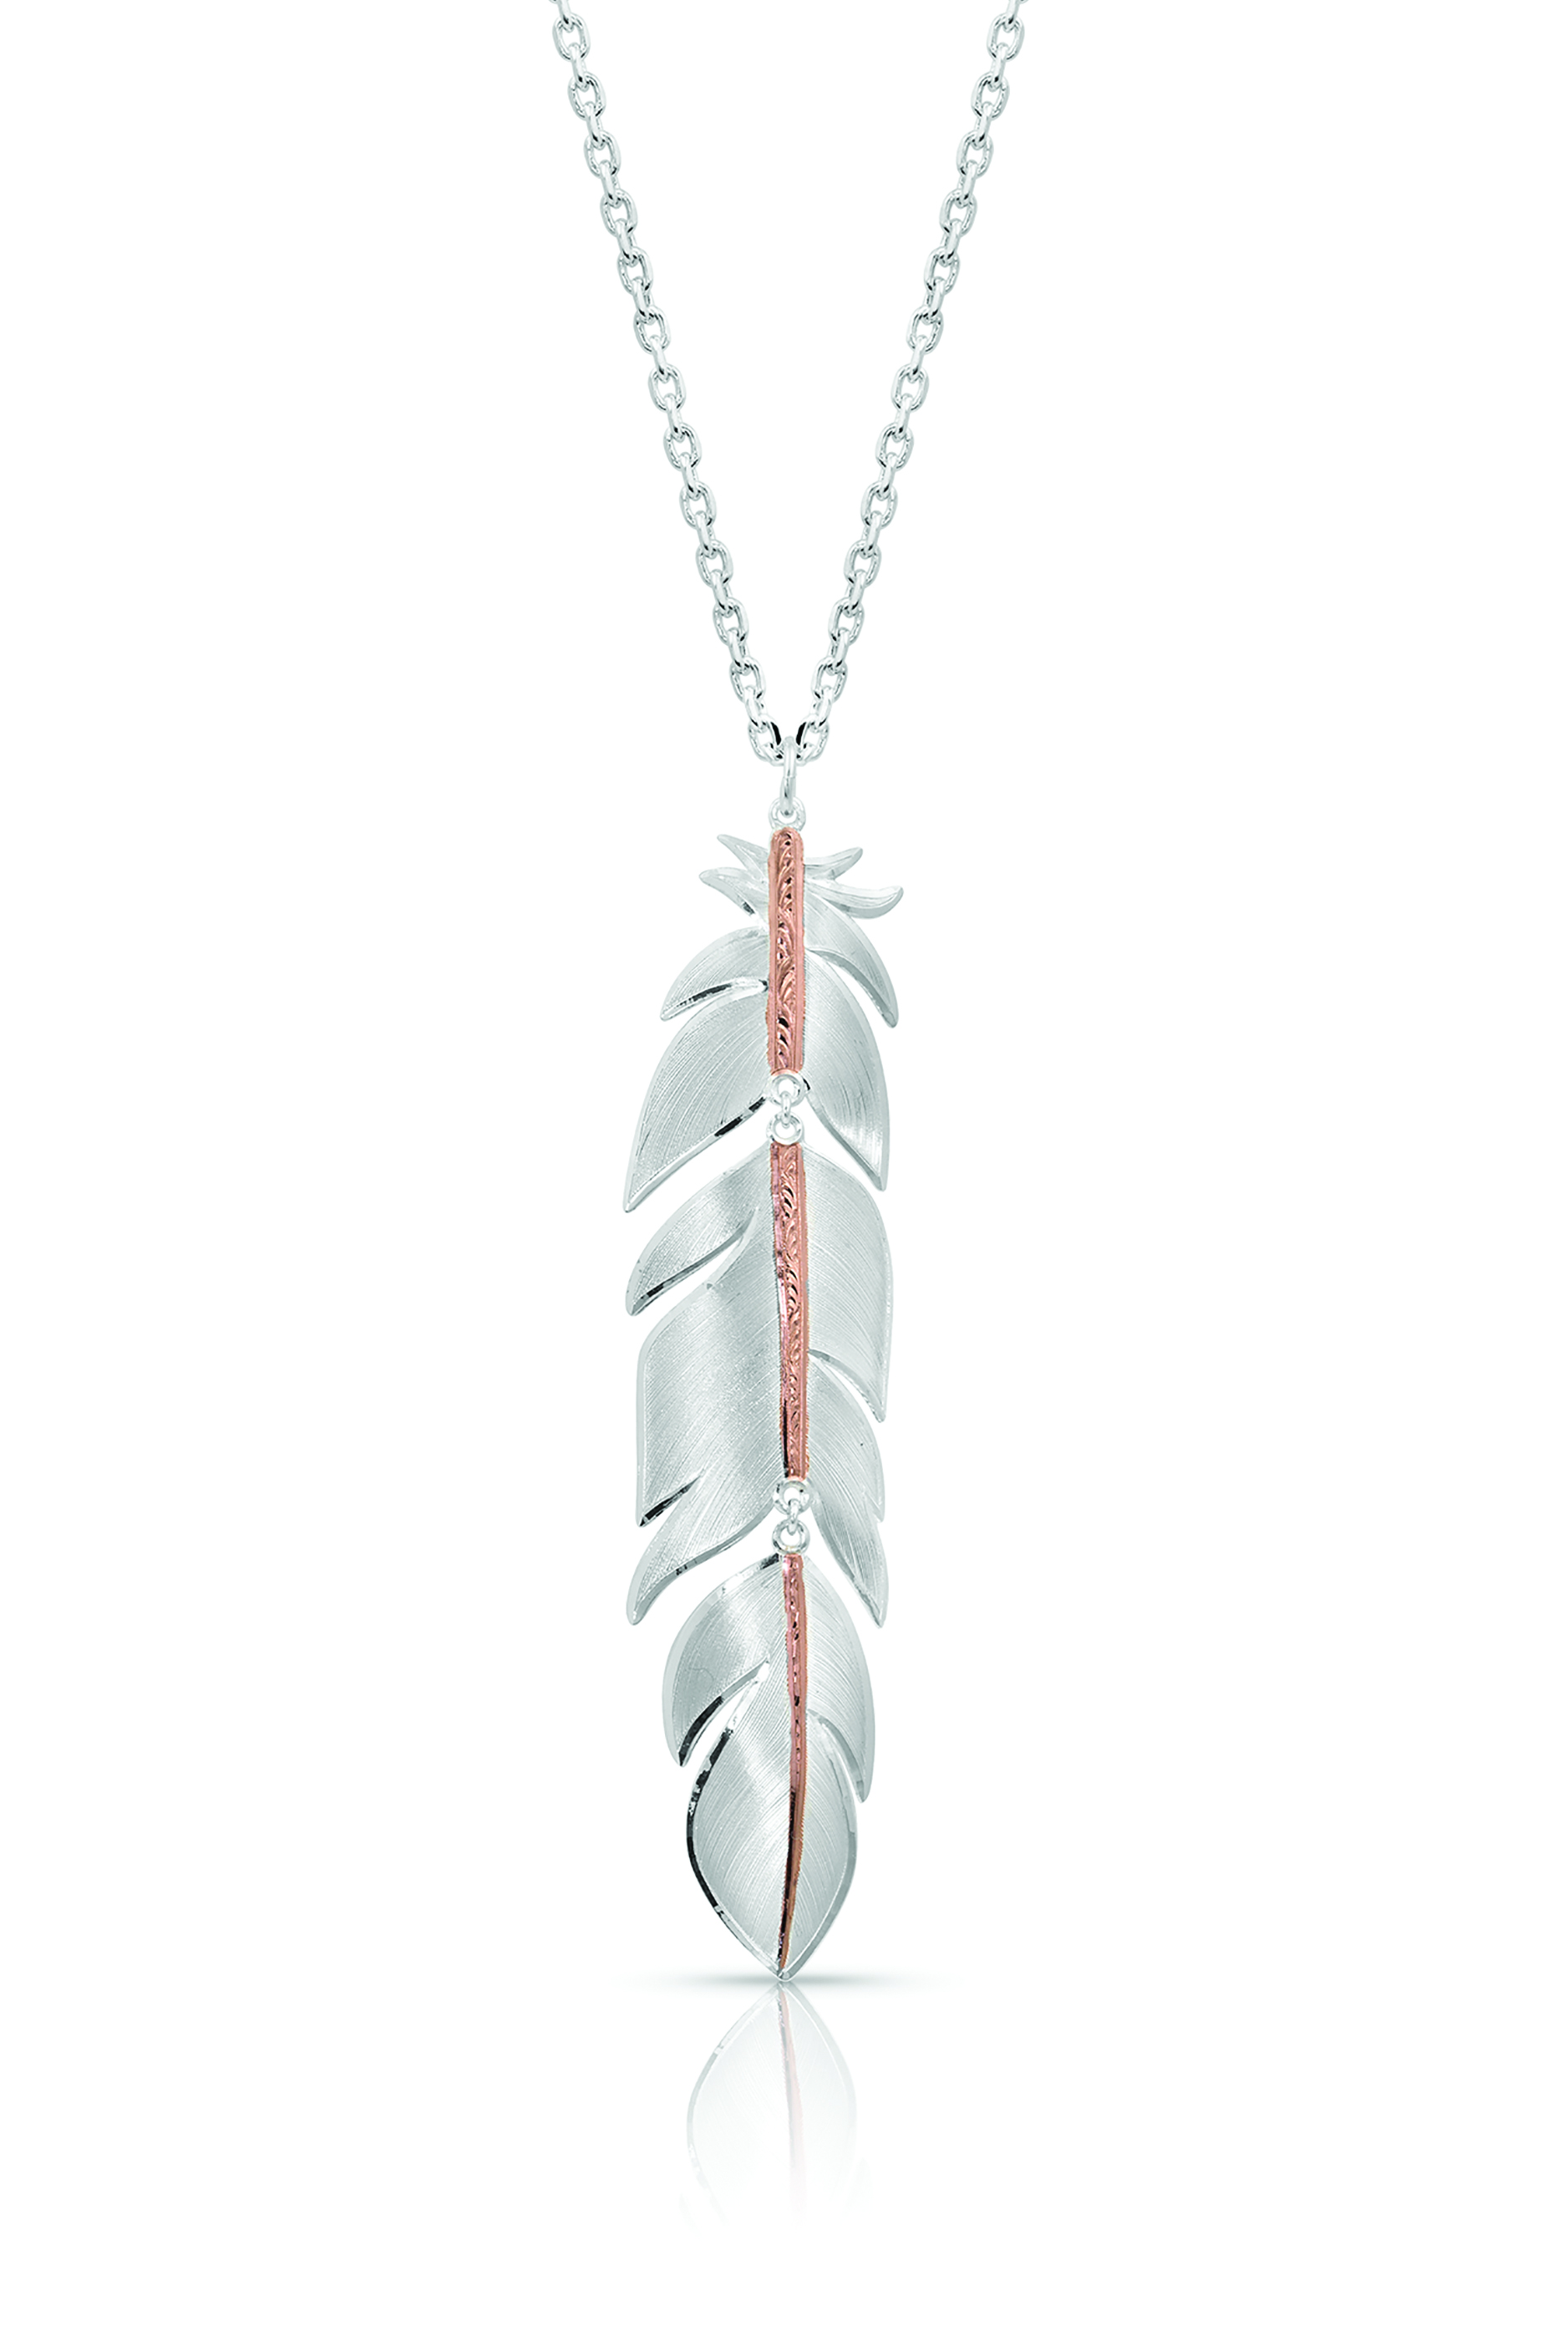 Montana Silversmith Majestic Feather Necklace – Lowry's Western Shop